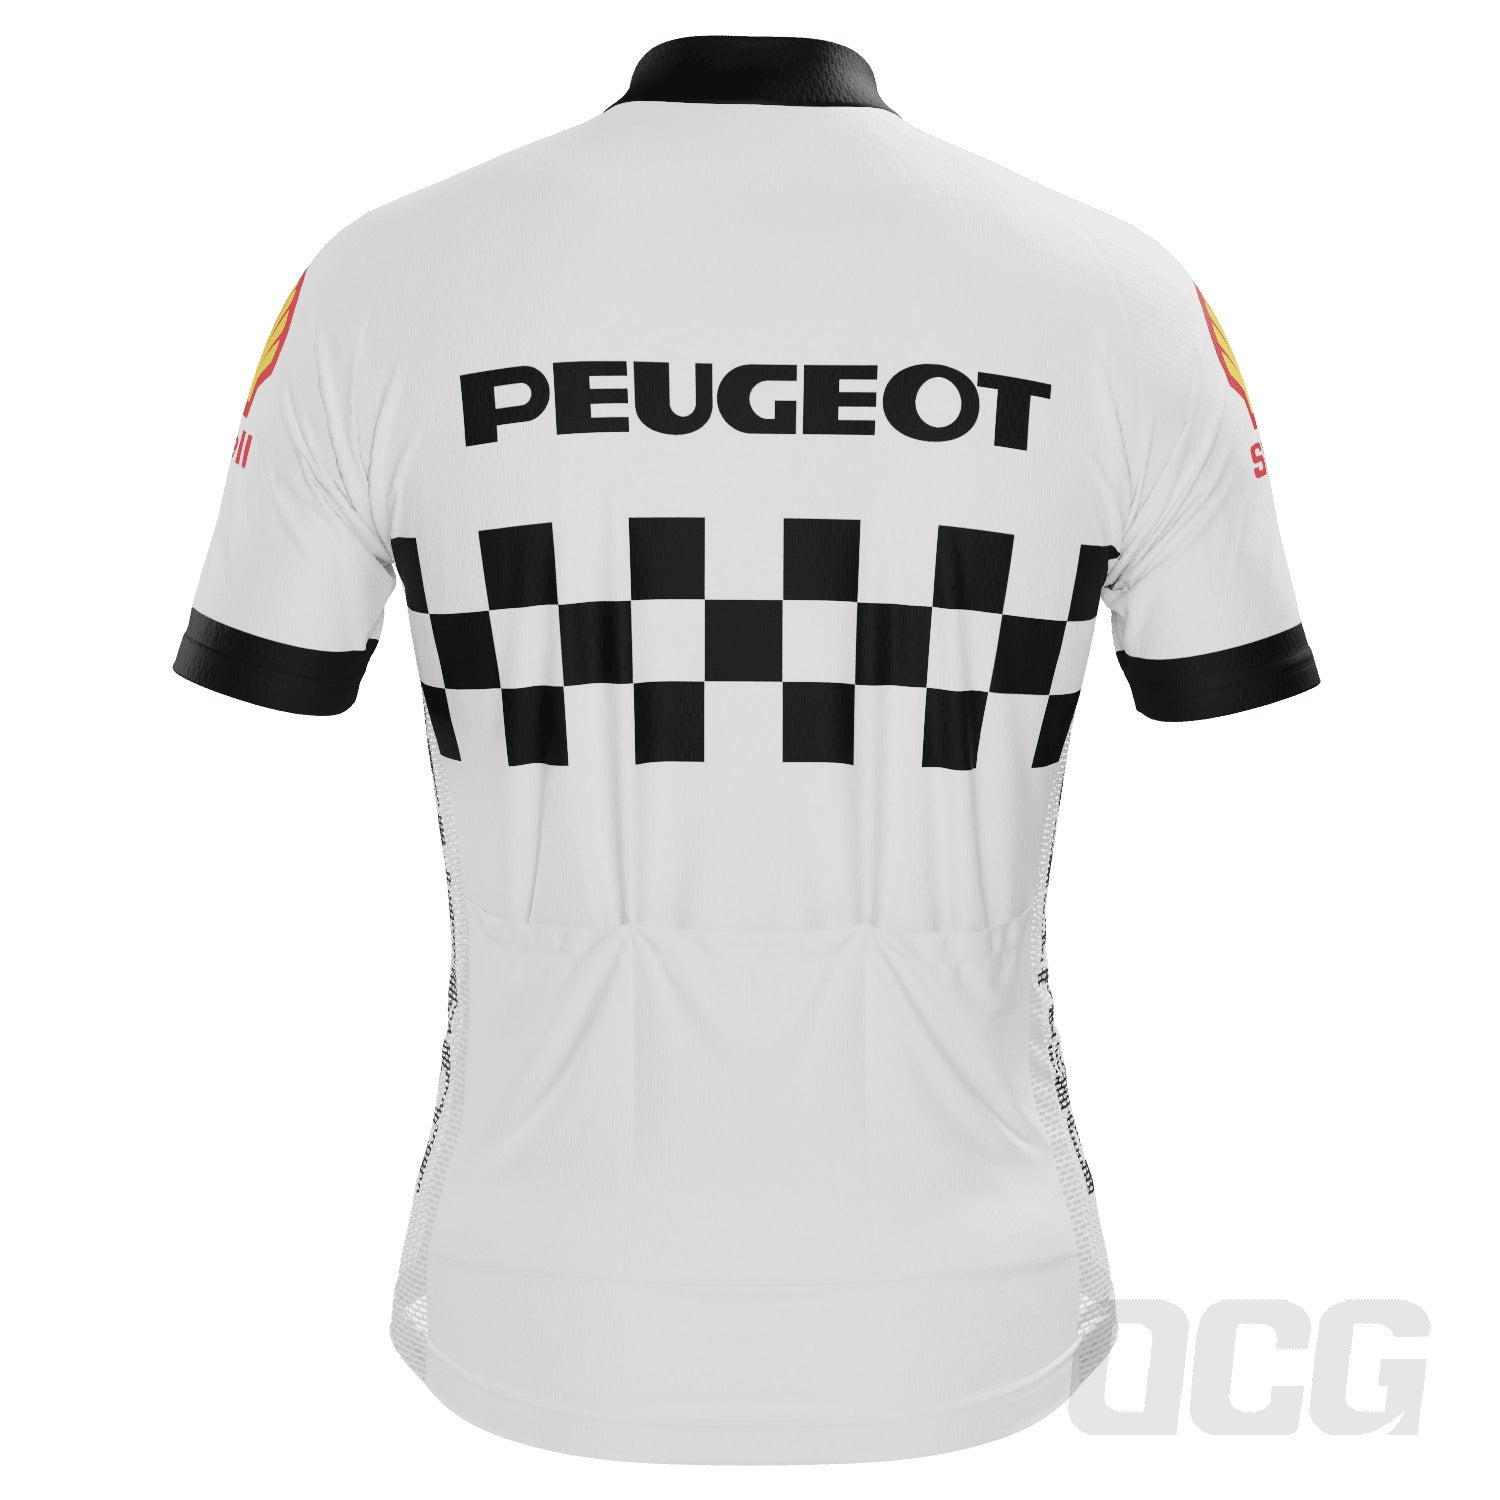 Men's Peugeot Shell Retro 1983 Short Sleeve Cycling Jersey